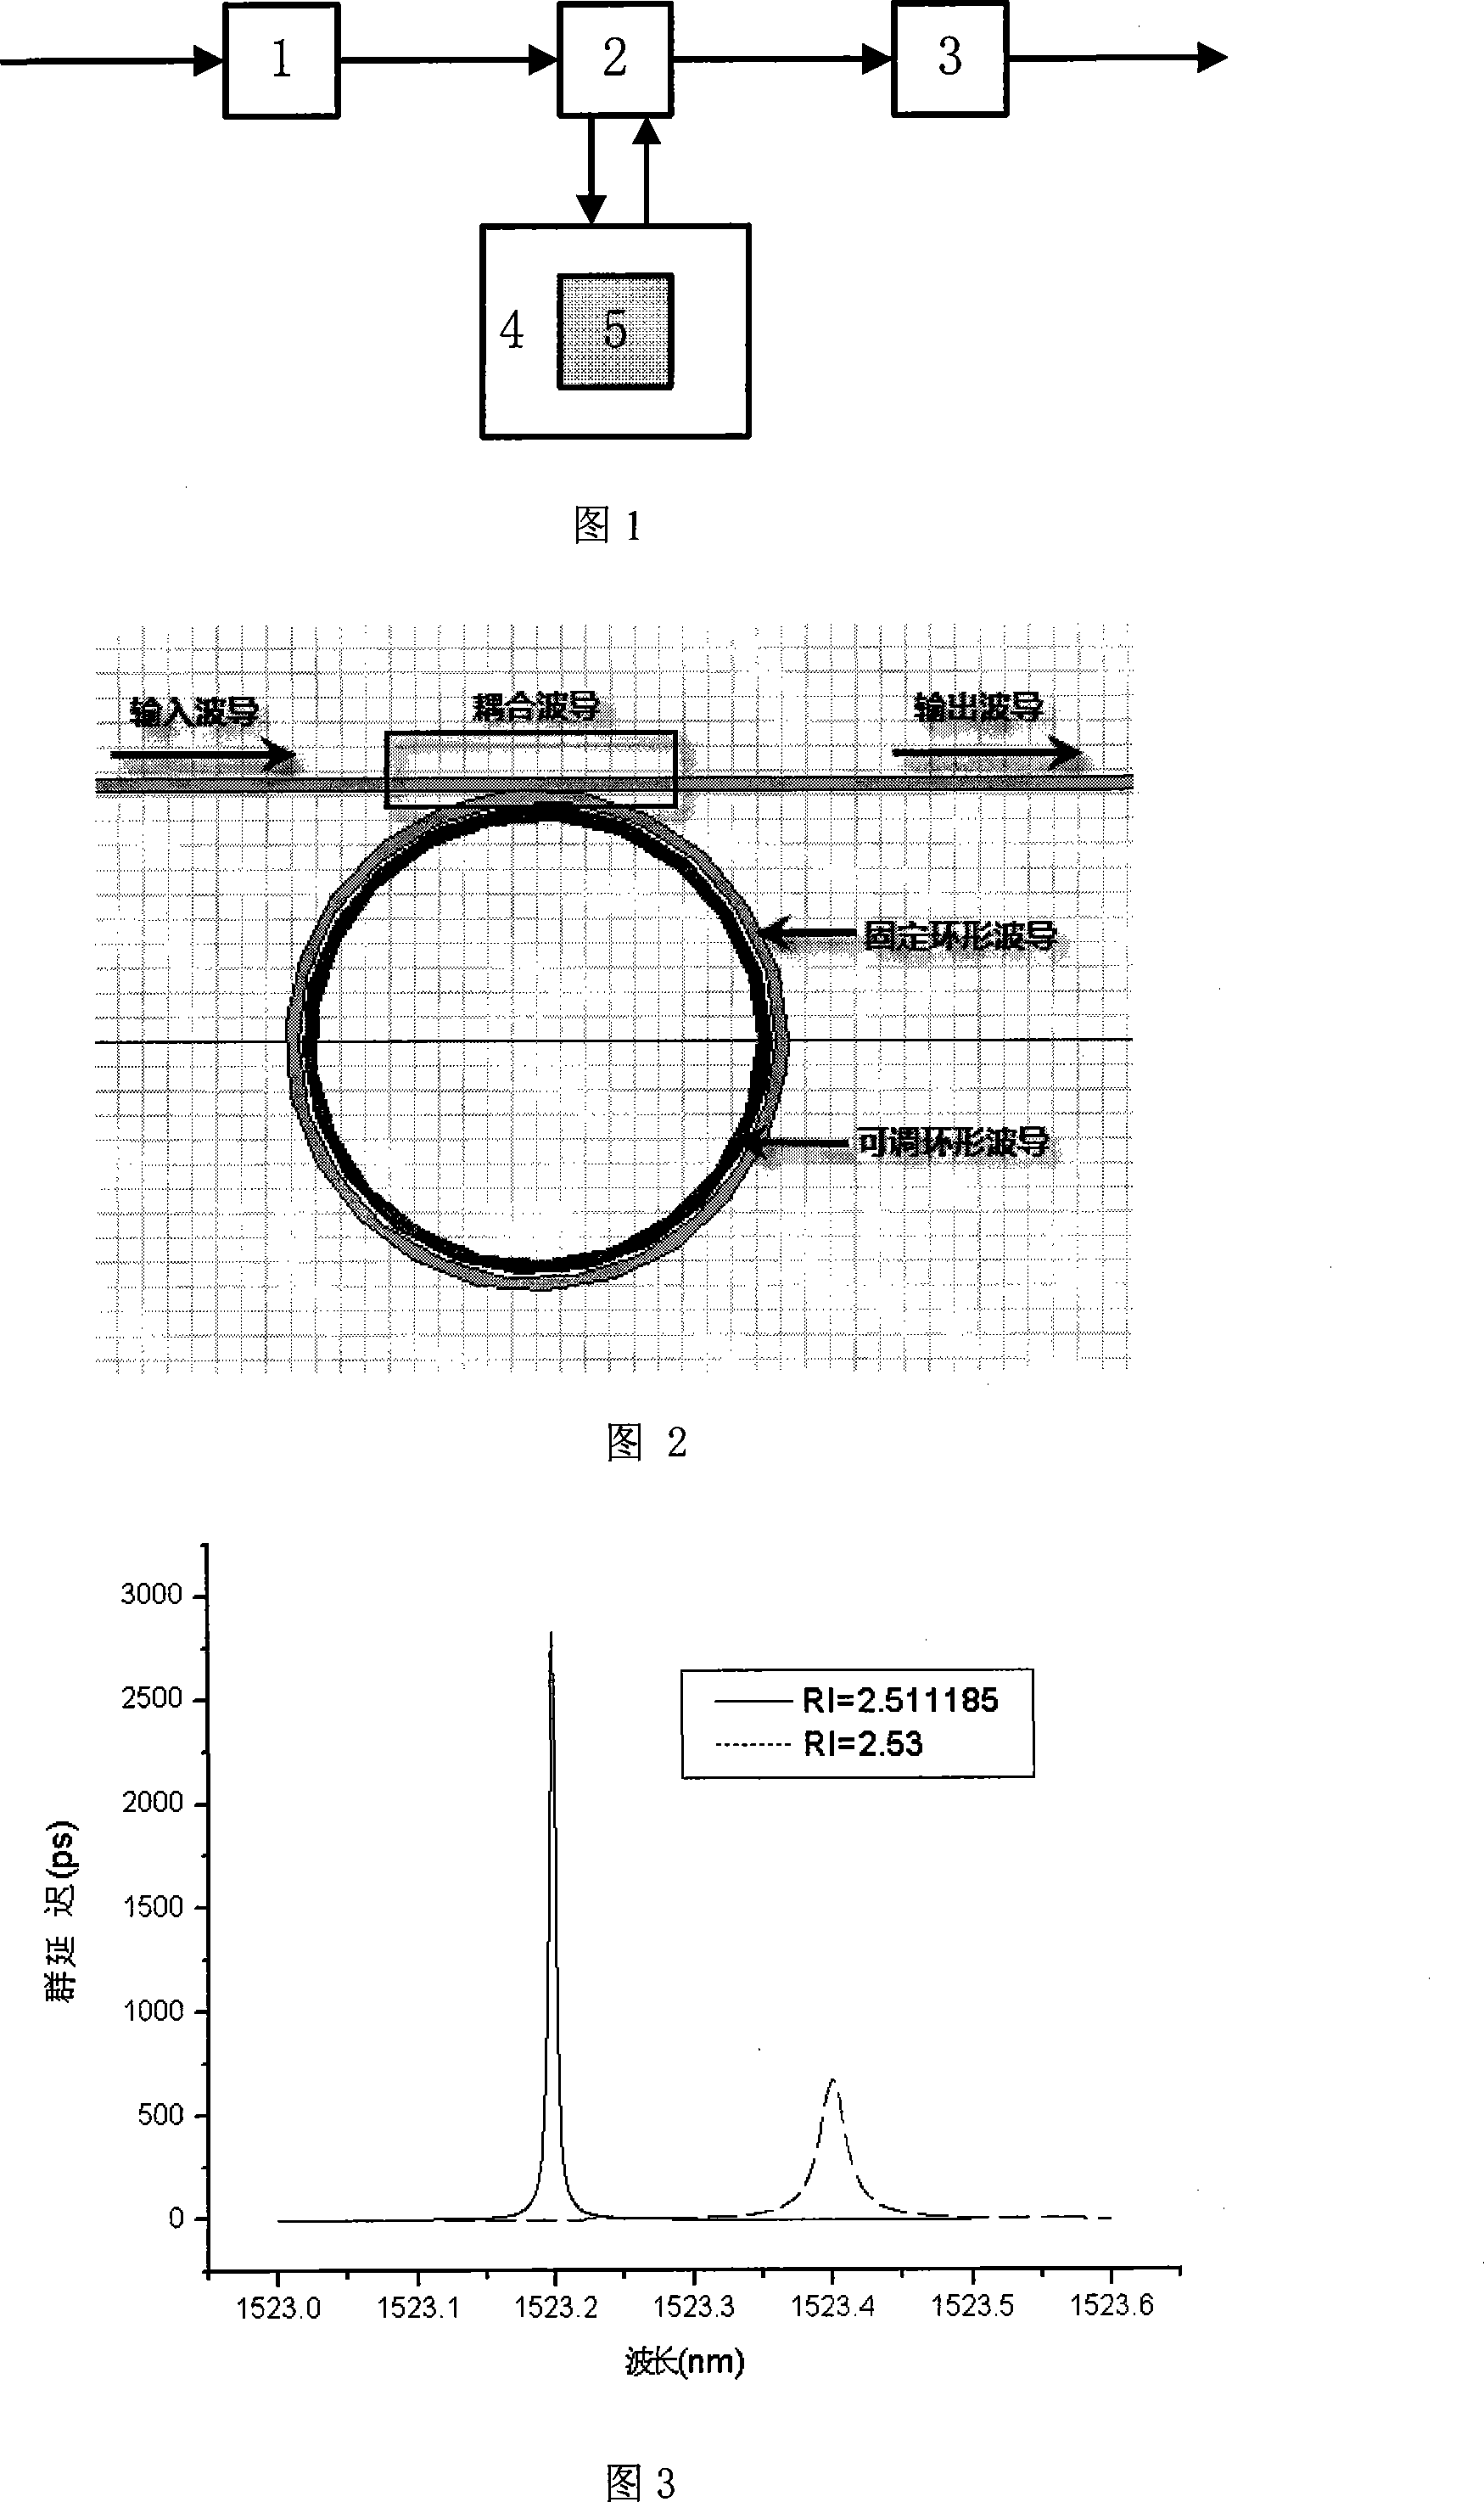 Adjustable optical dispersion compensator based on double-ring resonator